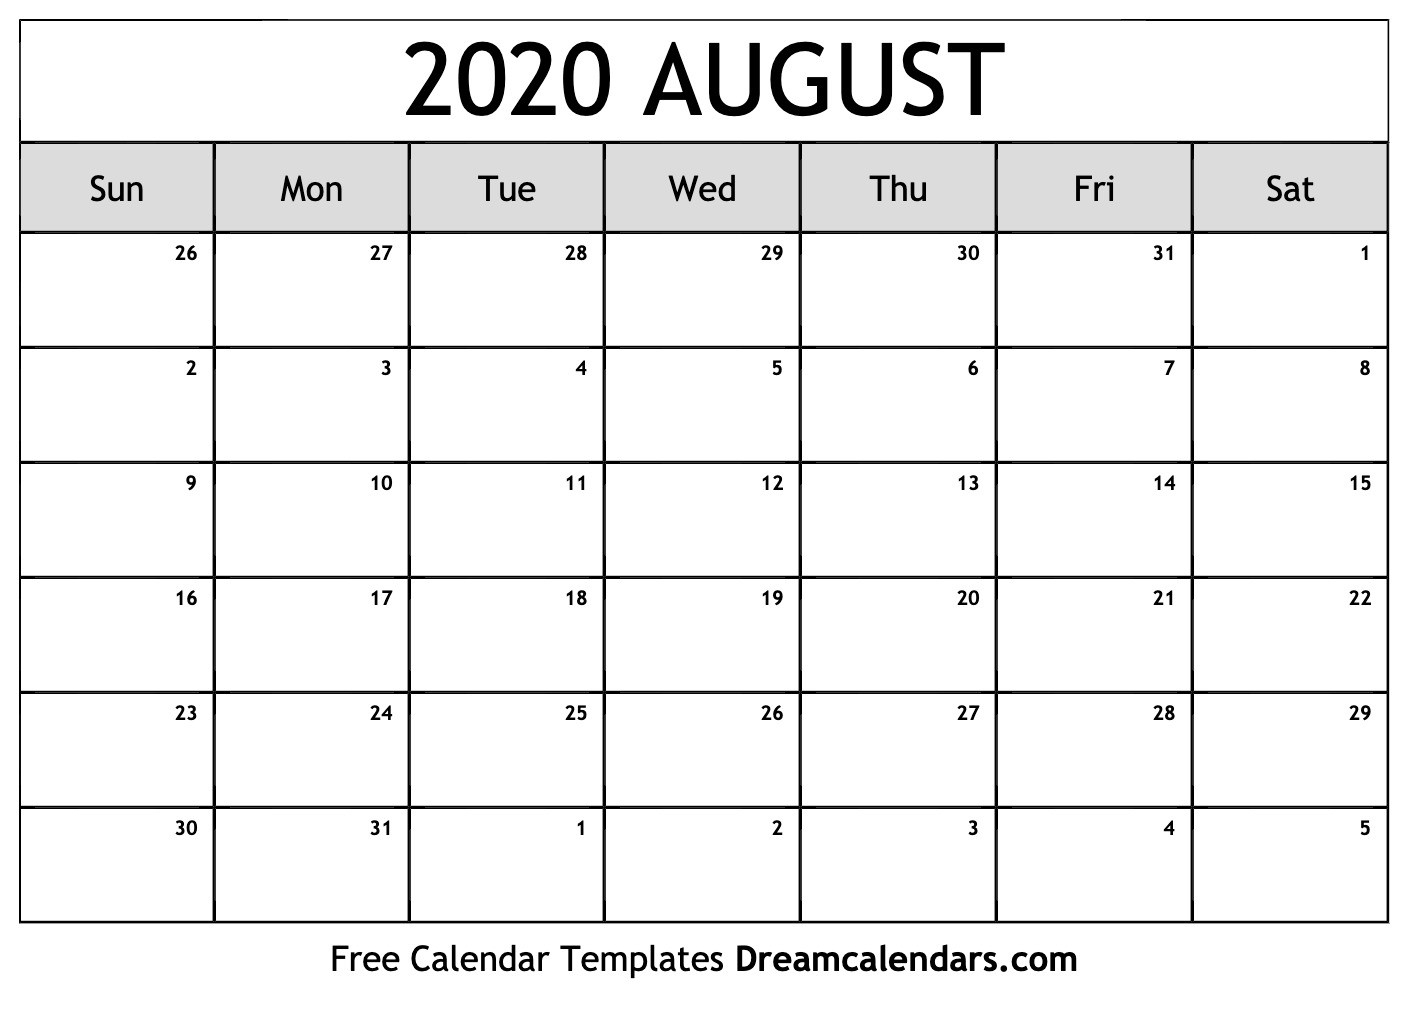 Free Blank August 2020 Printable Calendar-August 2020 Colorful Calendar Template